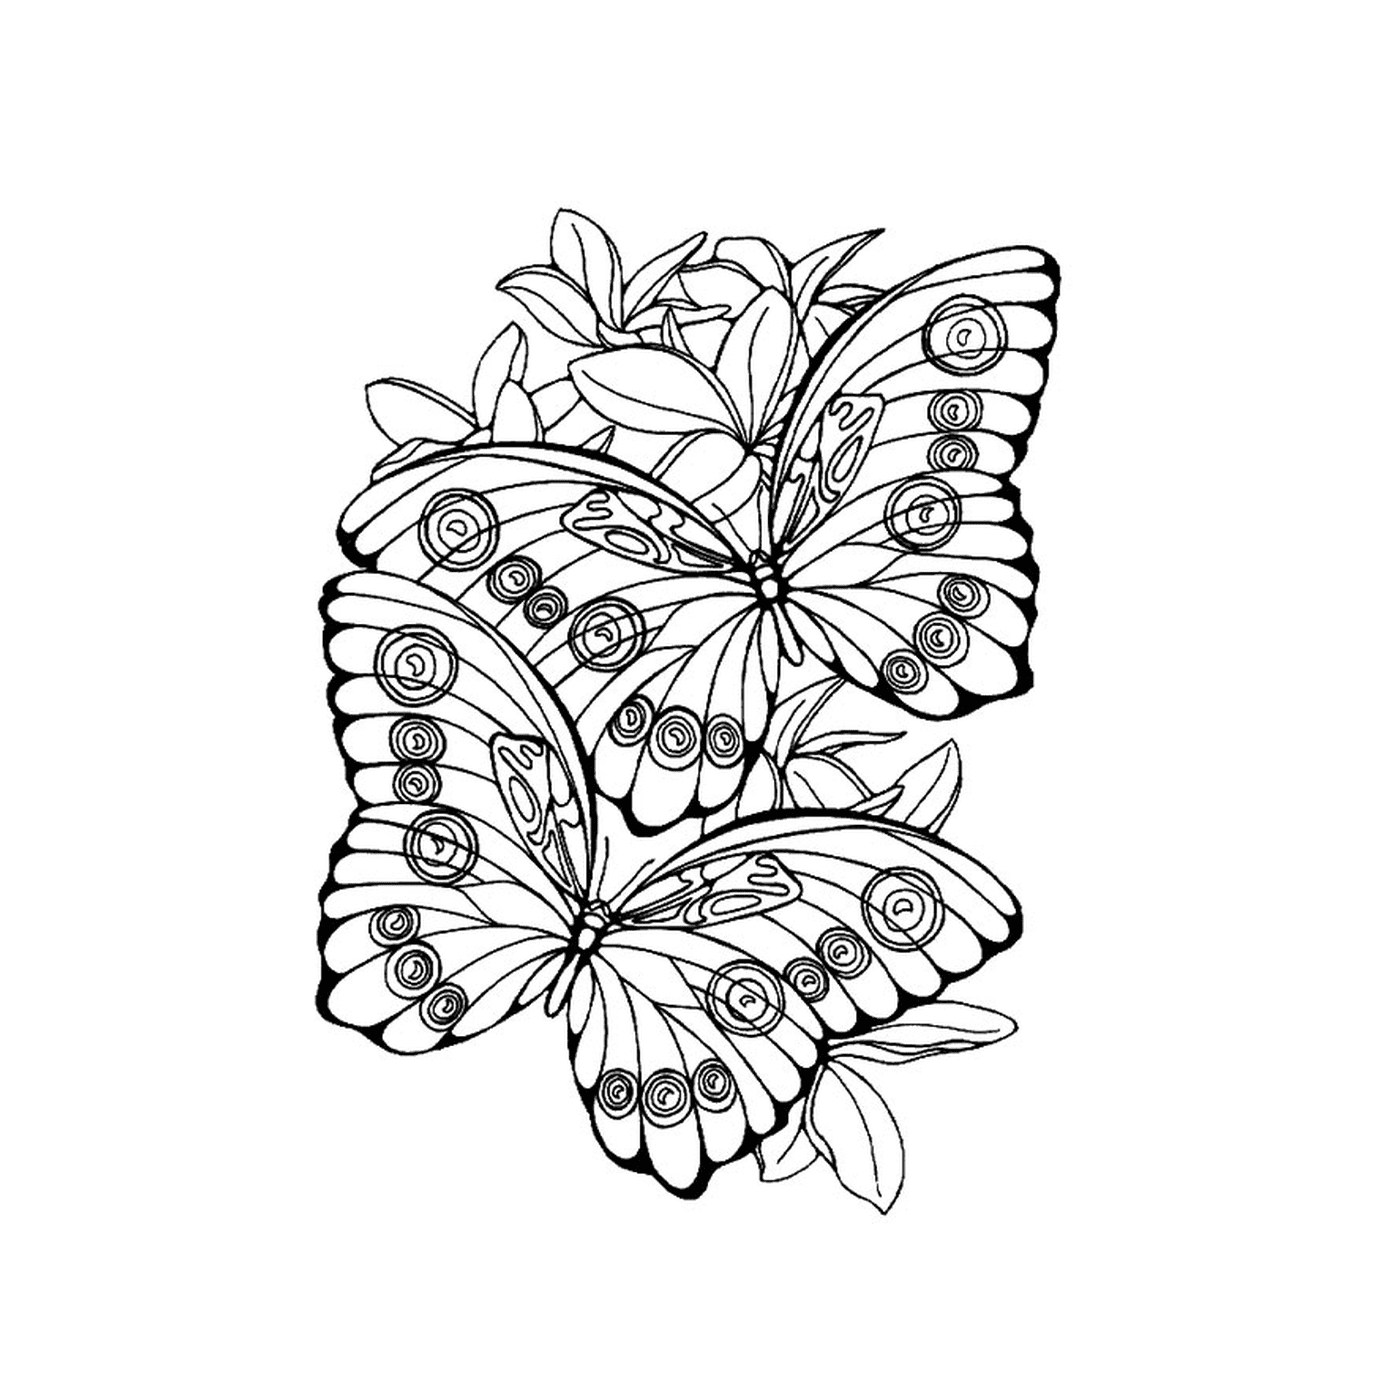  mariposa cebra en la rama 